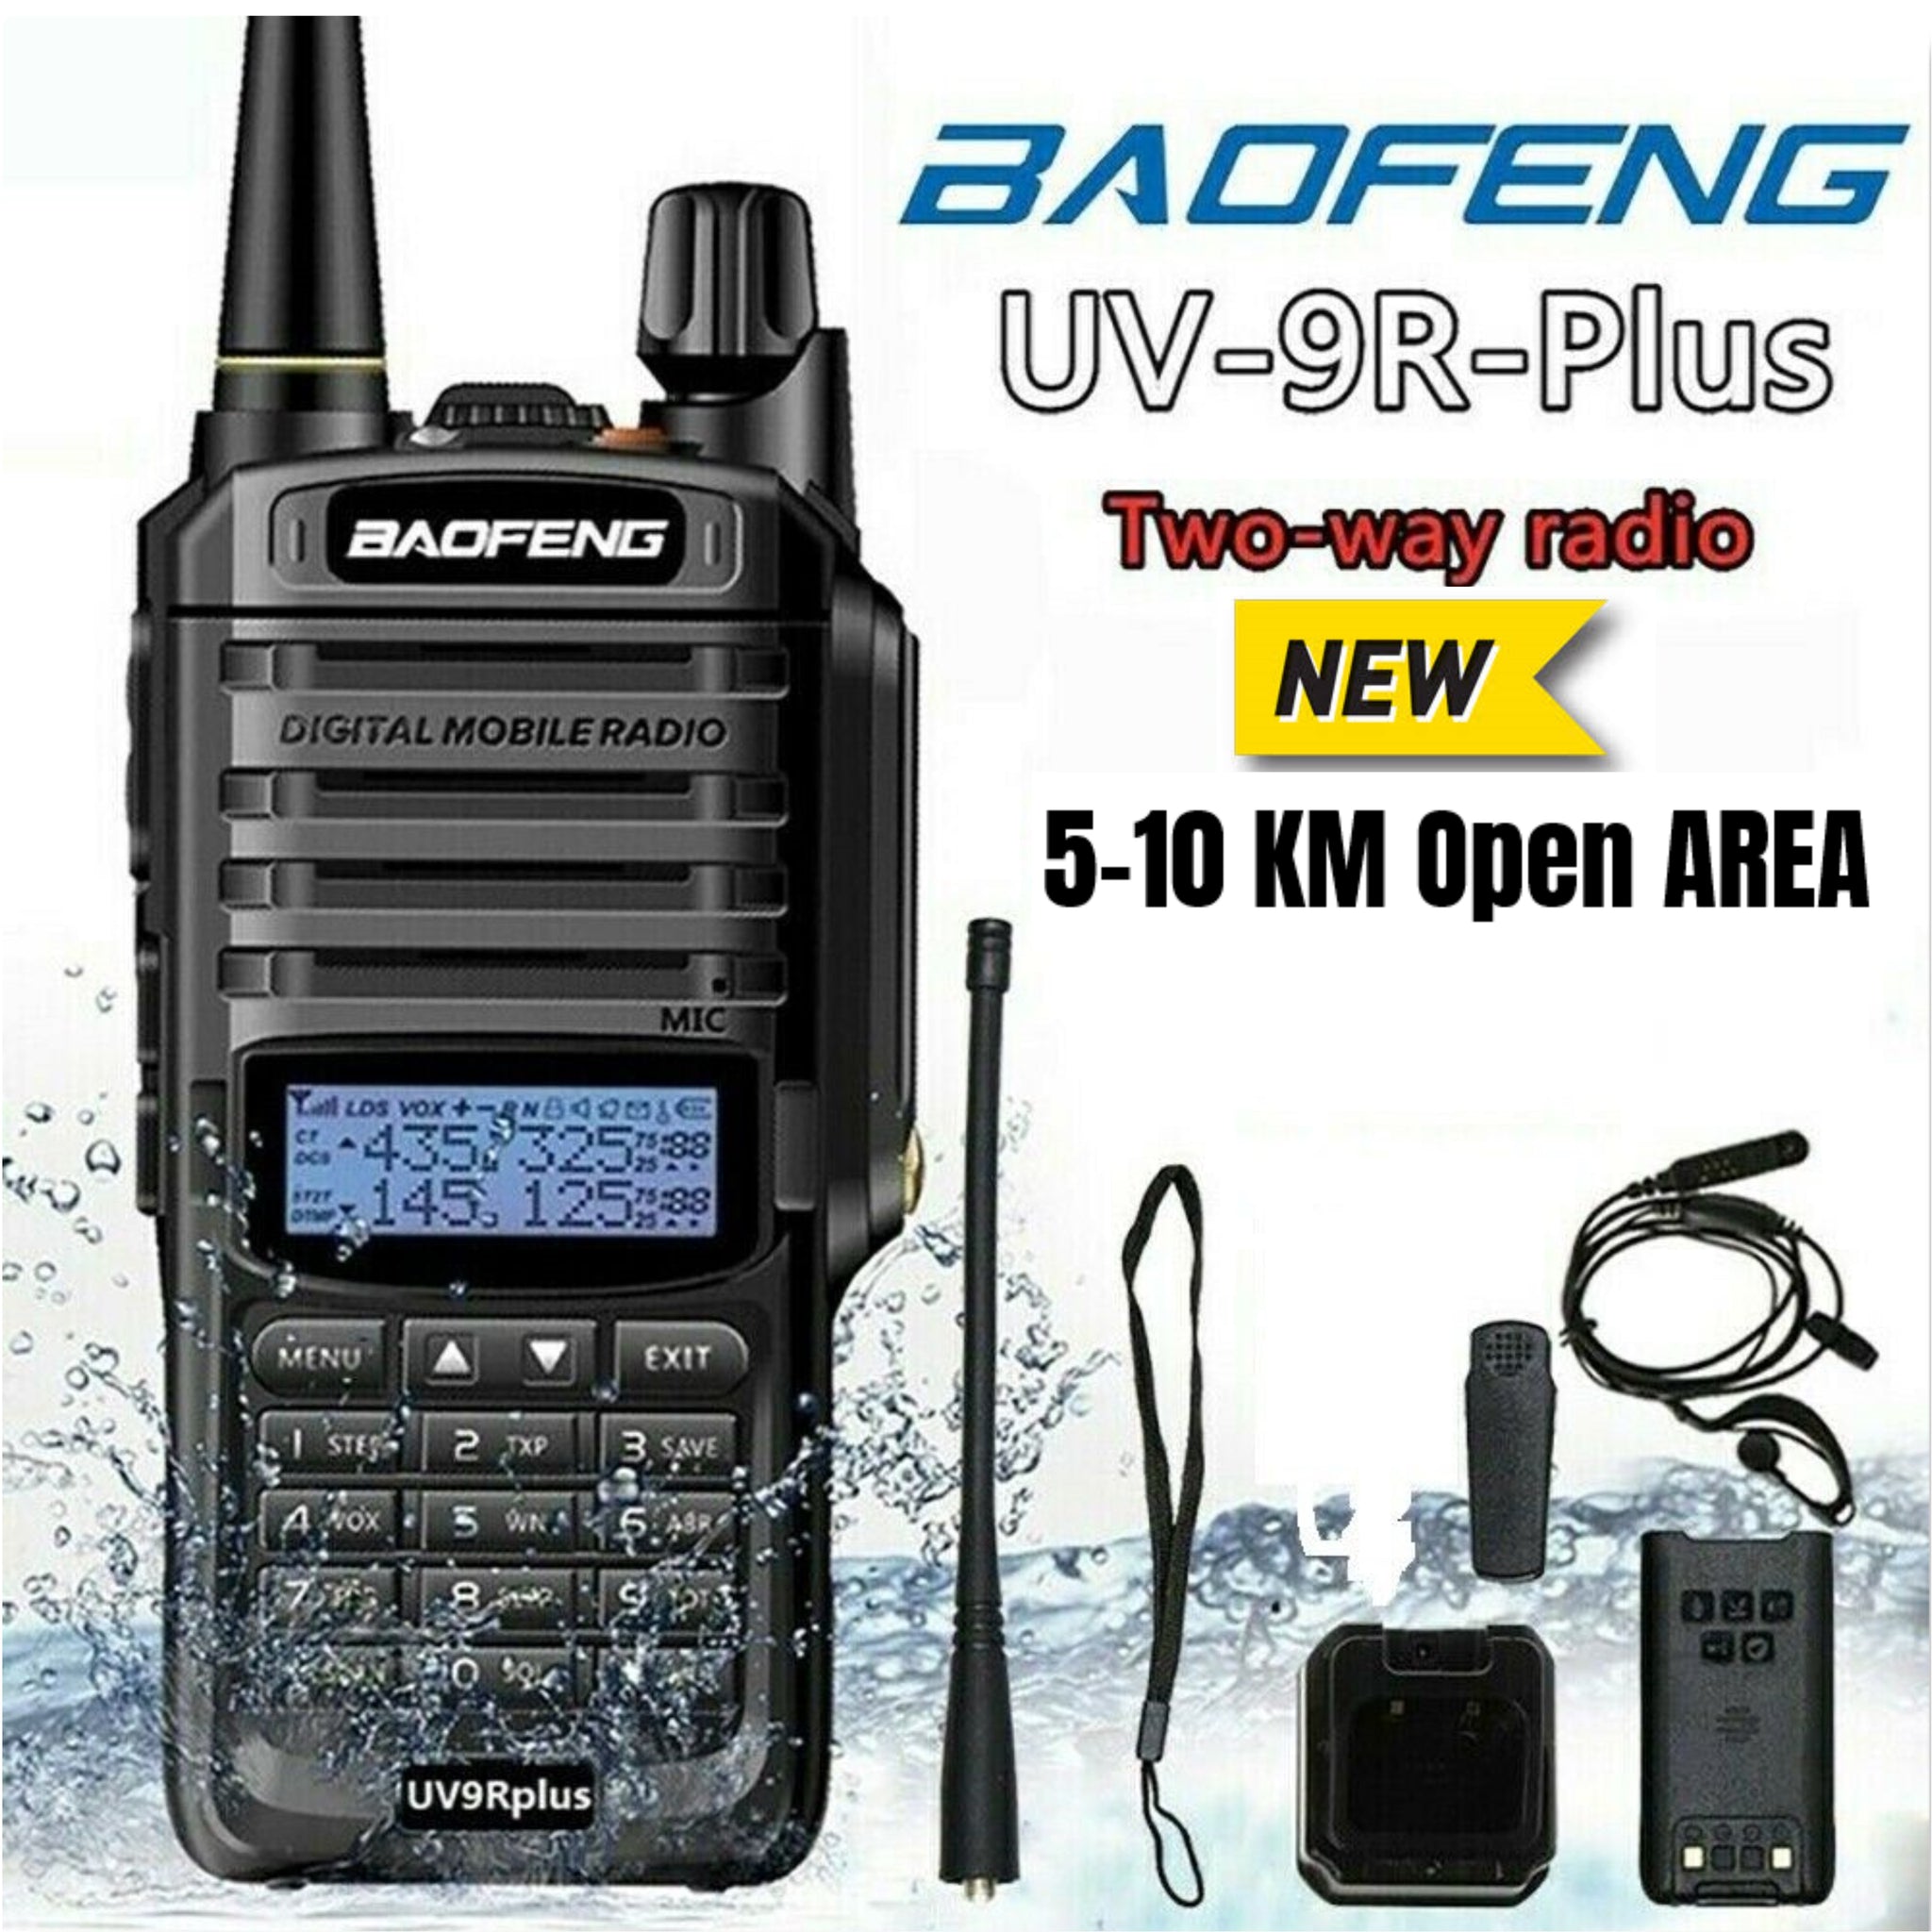 Radio Baofeng Uv-9r Plus - Tienda LC